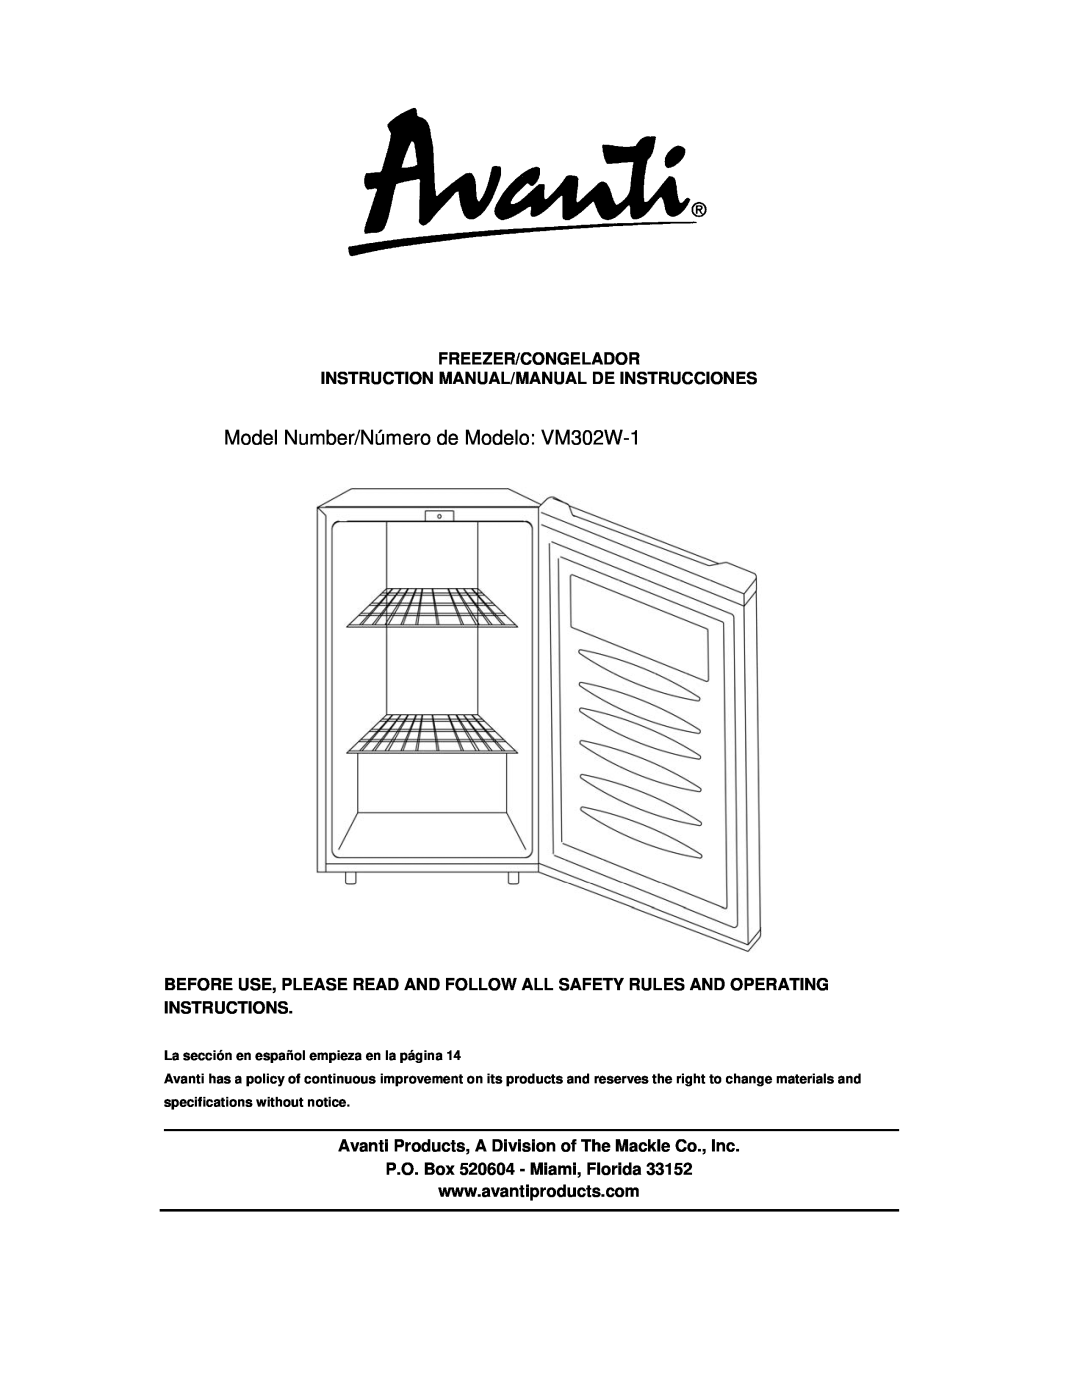 Avanti instruction manual Model Number/Número de Modelo VM302W-1, Freezer/Congelador, P.O. Box 520604 - Miami, Florida 